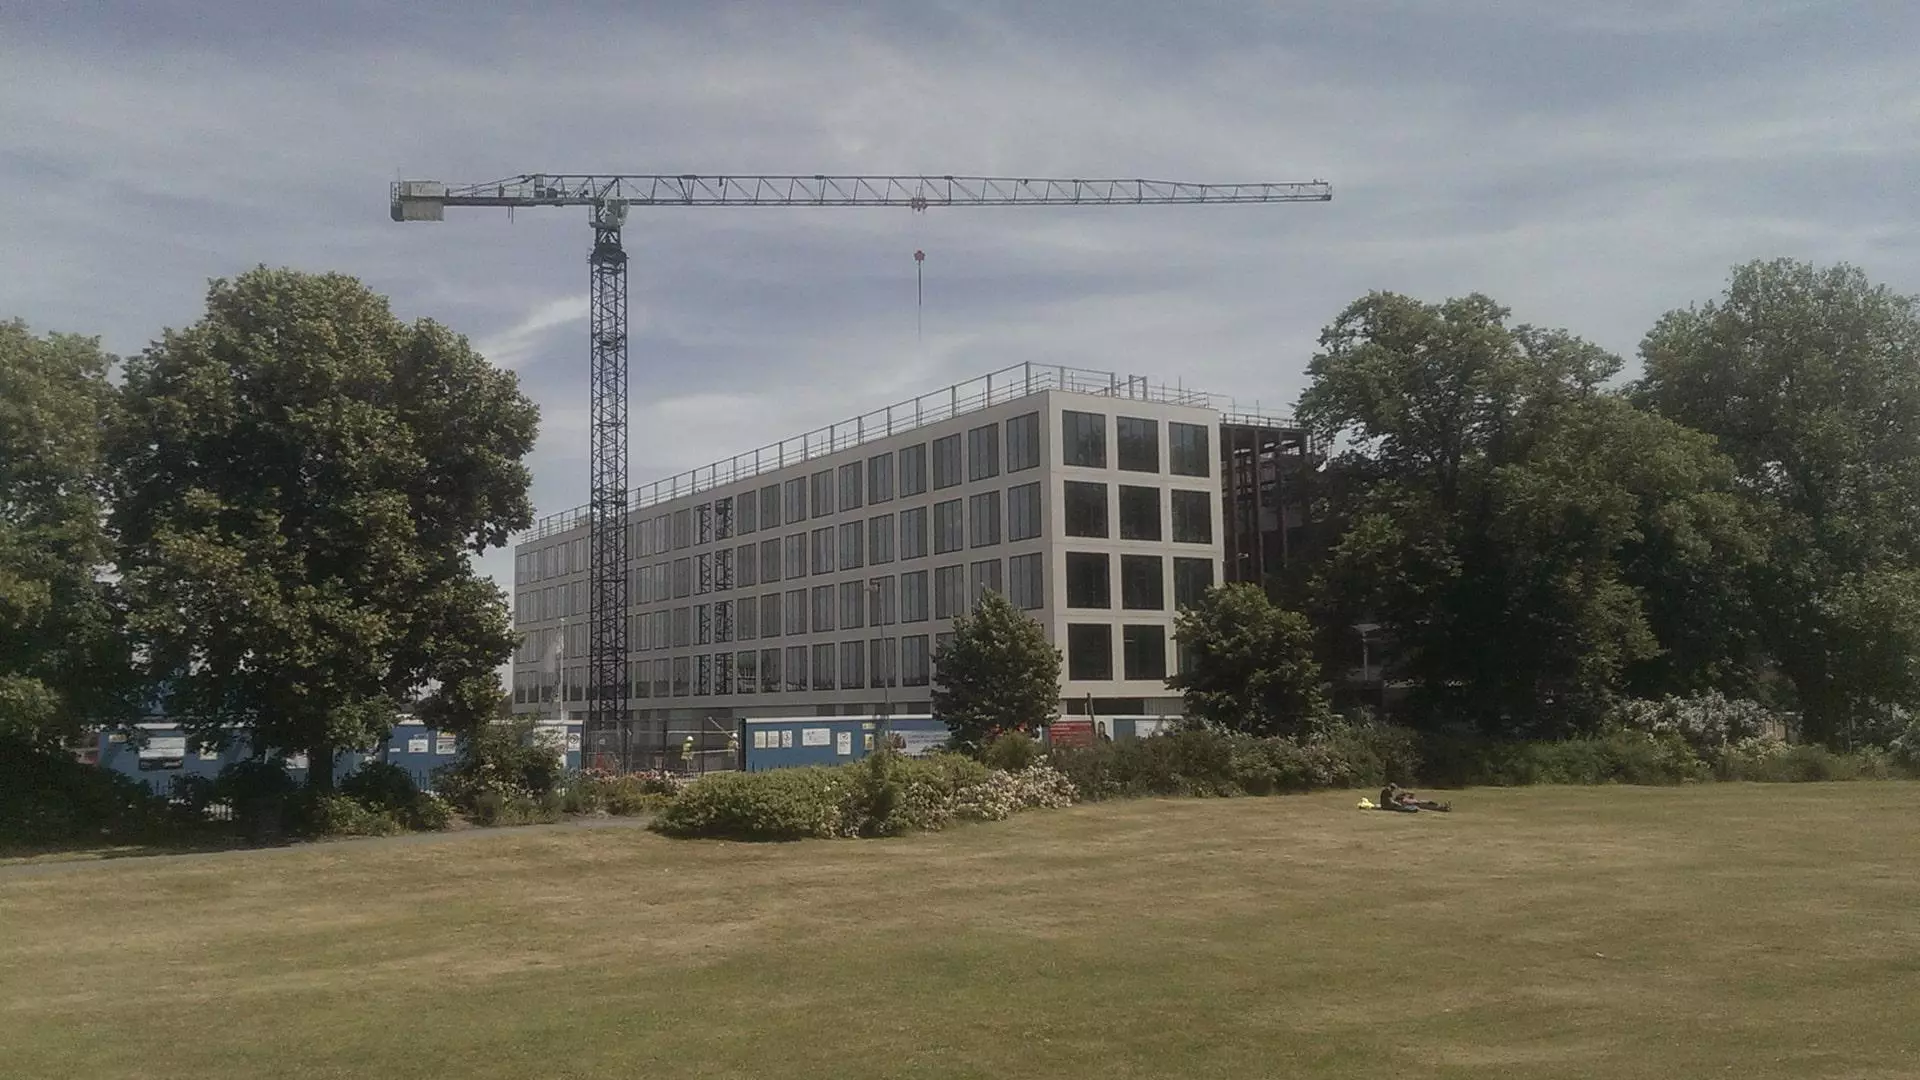 The construction of Solent University's Spark building